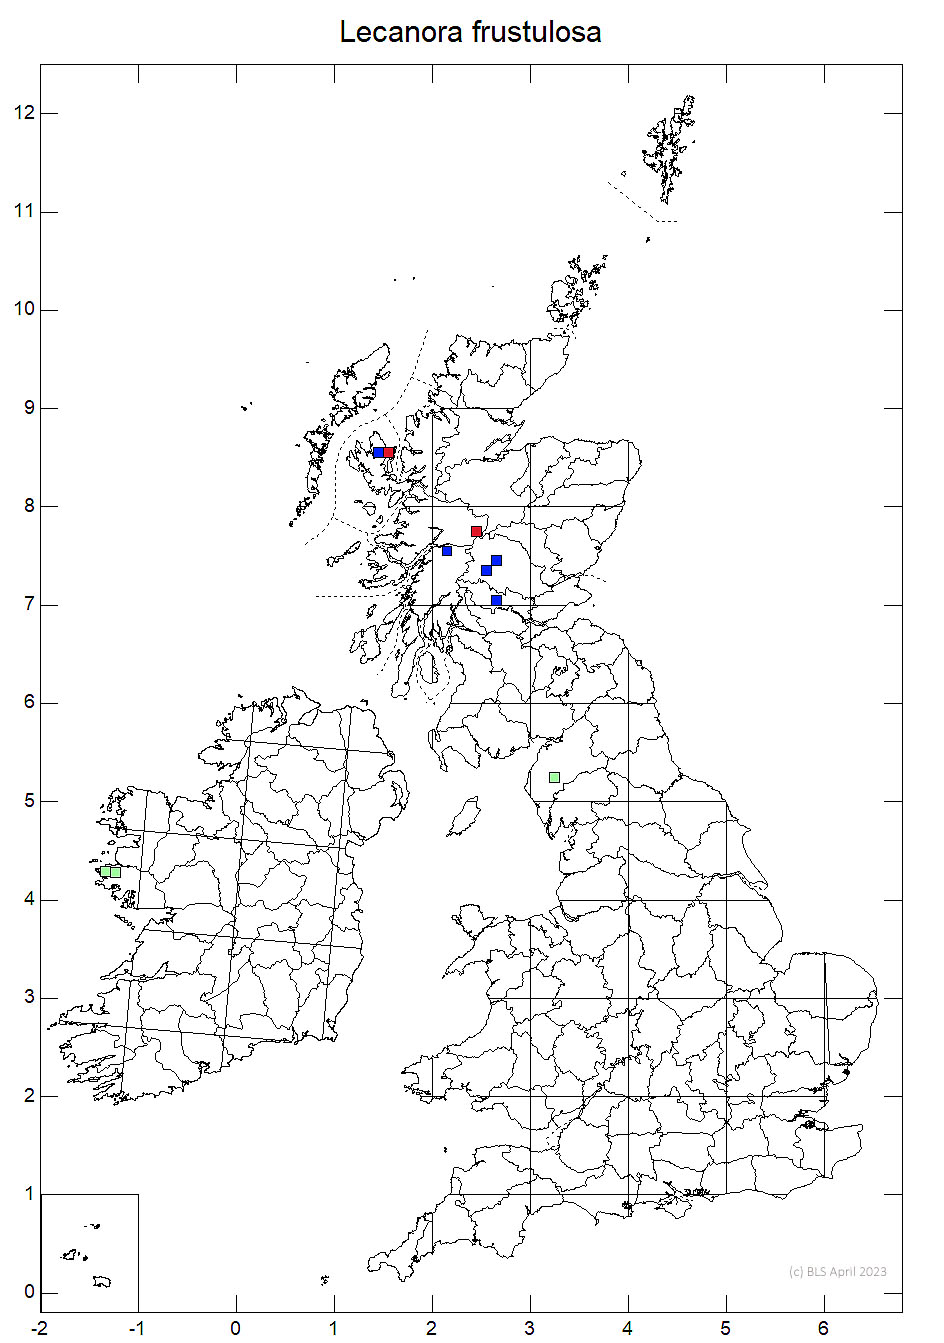 Lecanora frustulosa 10km sq distribution map